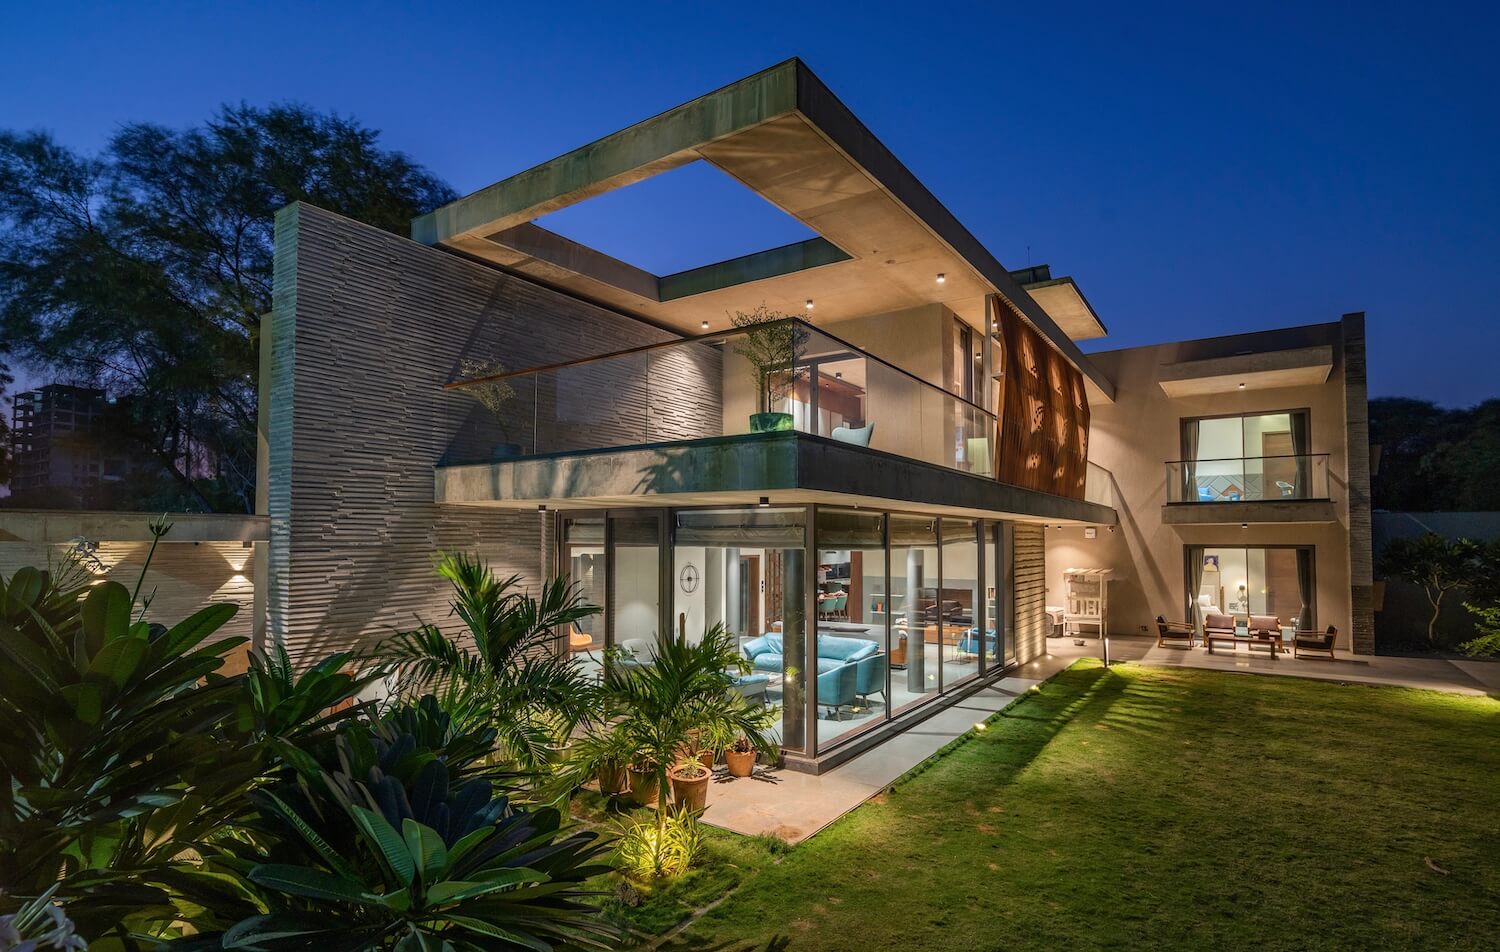 Building a modern L-shaped architect's house - floor plan & design